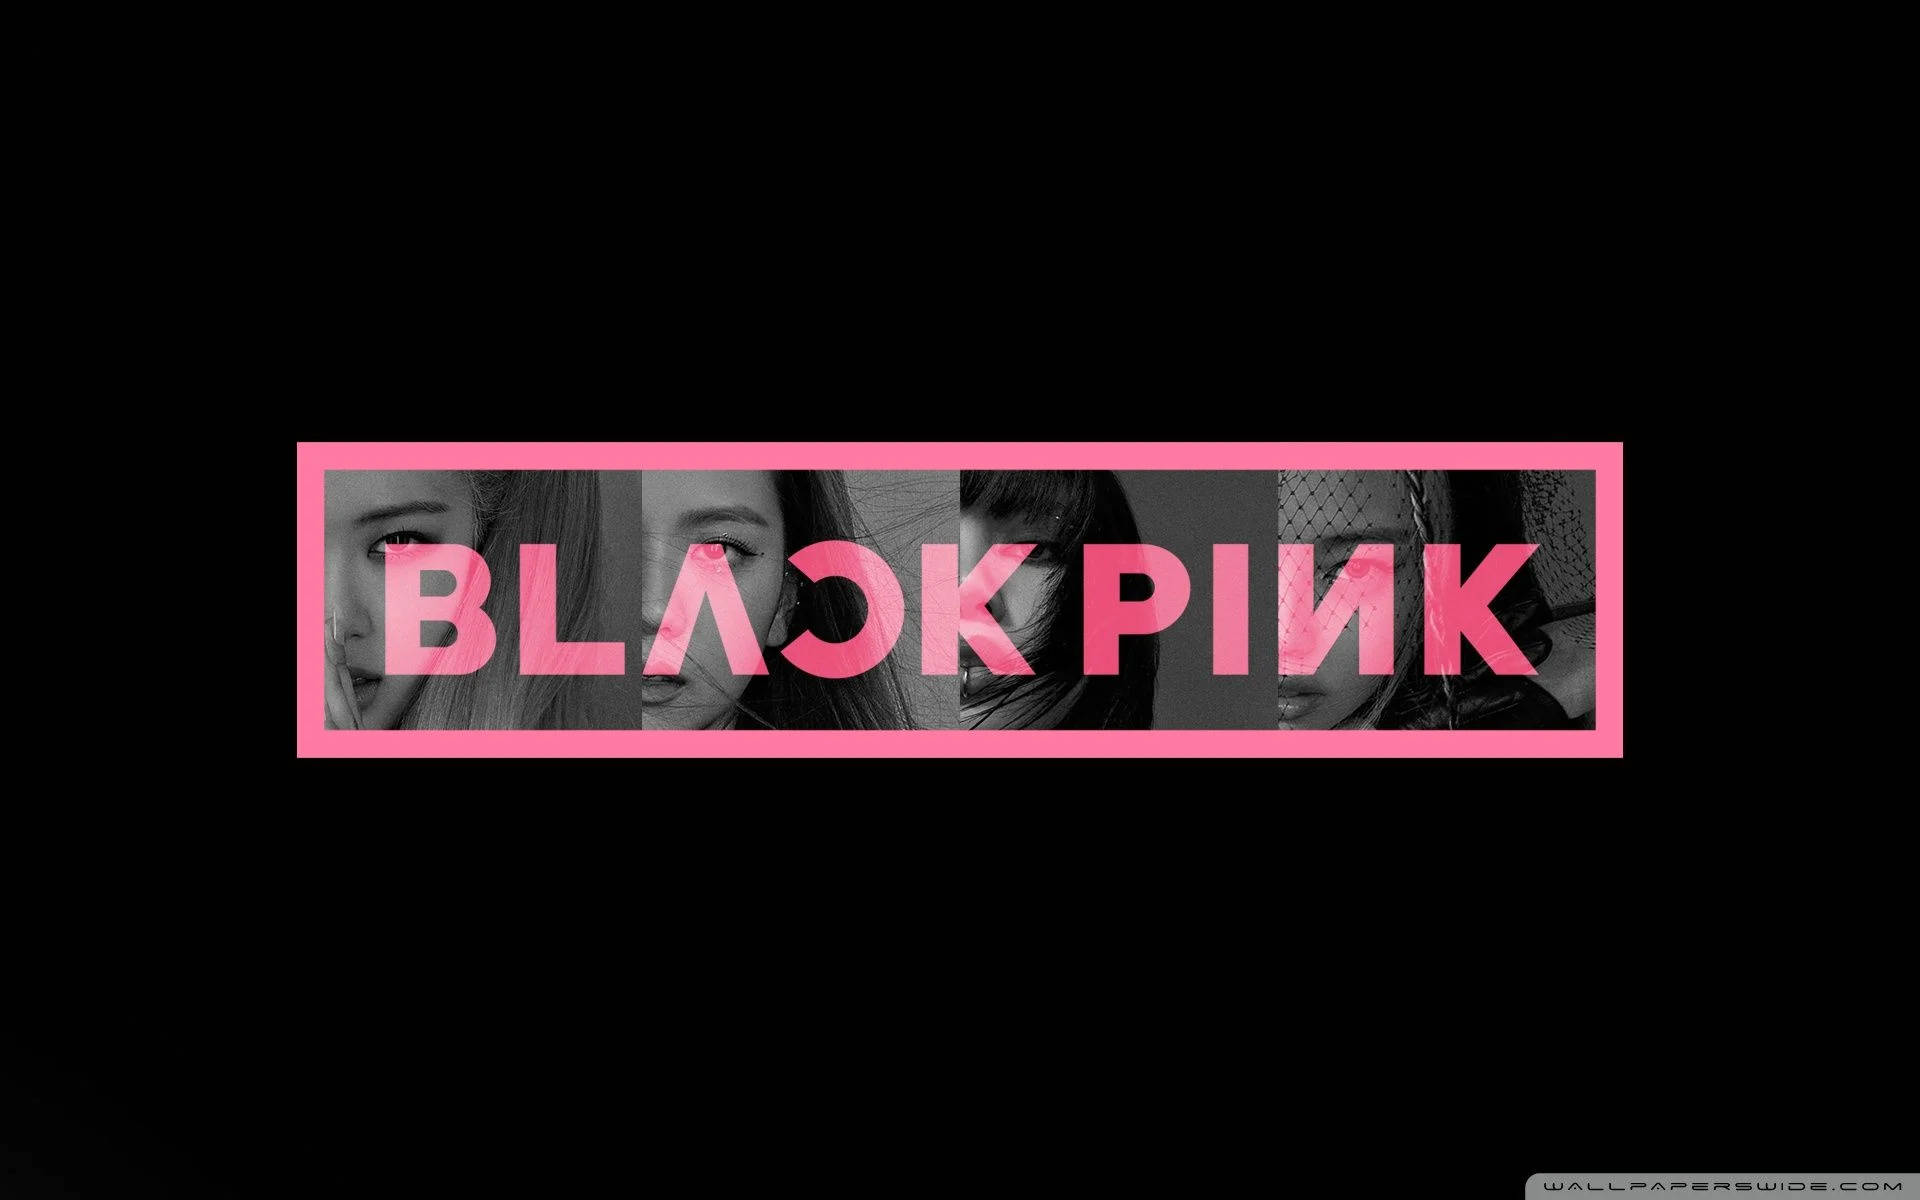 Blackpink's Iconic Logo Wallpaper